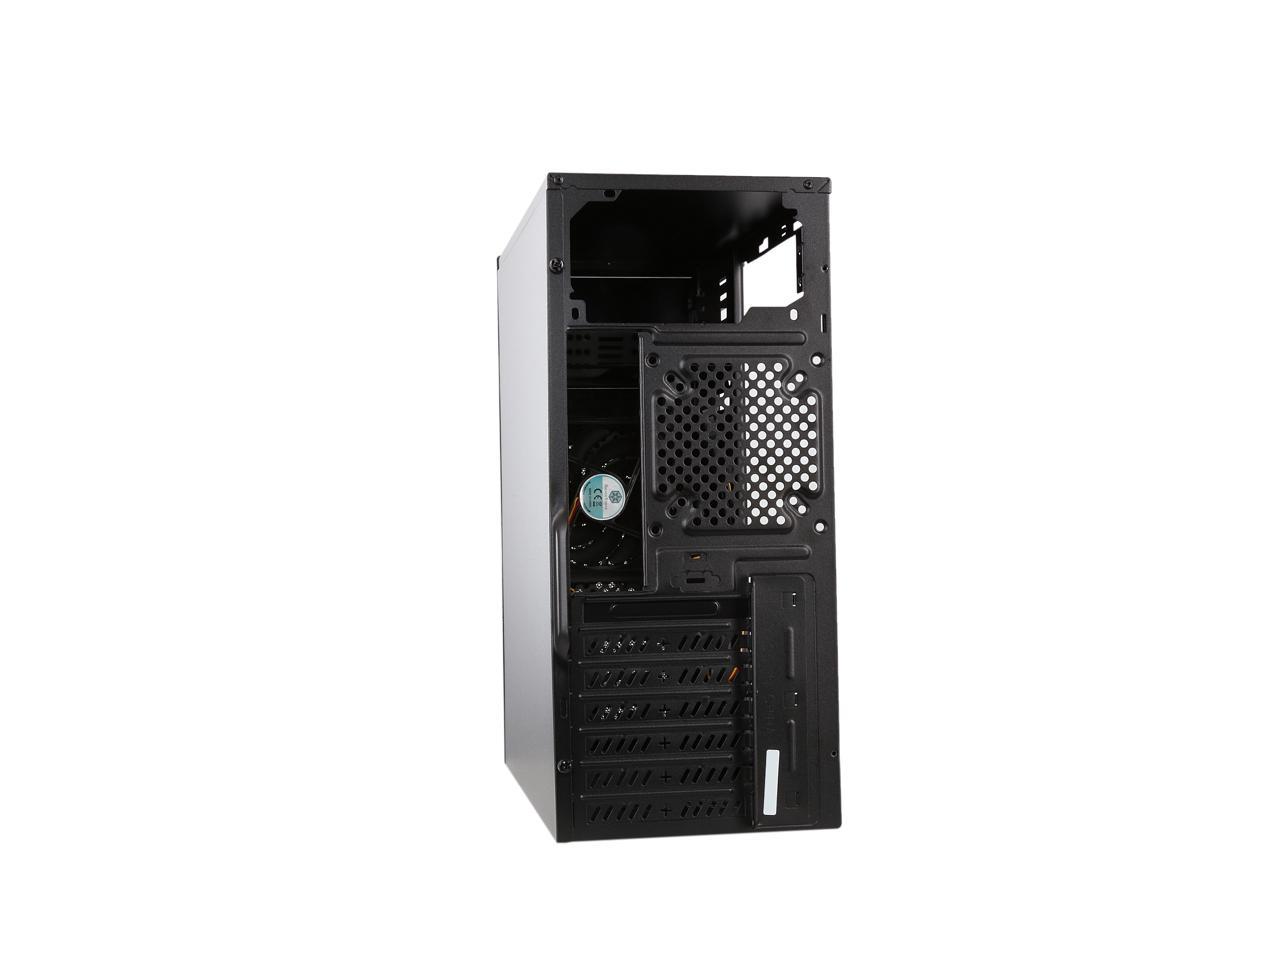 SilverStone Precision SST-PS13B Black Computer Case - Newegg.com